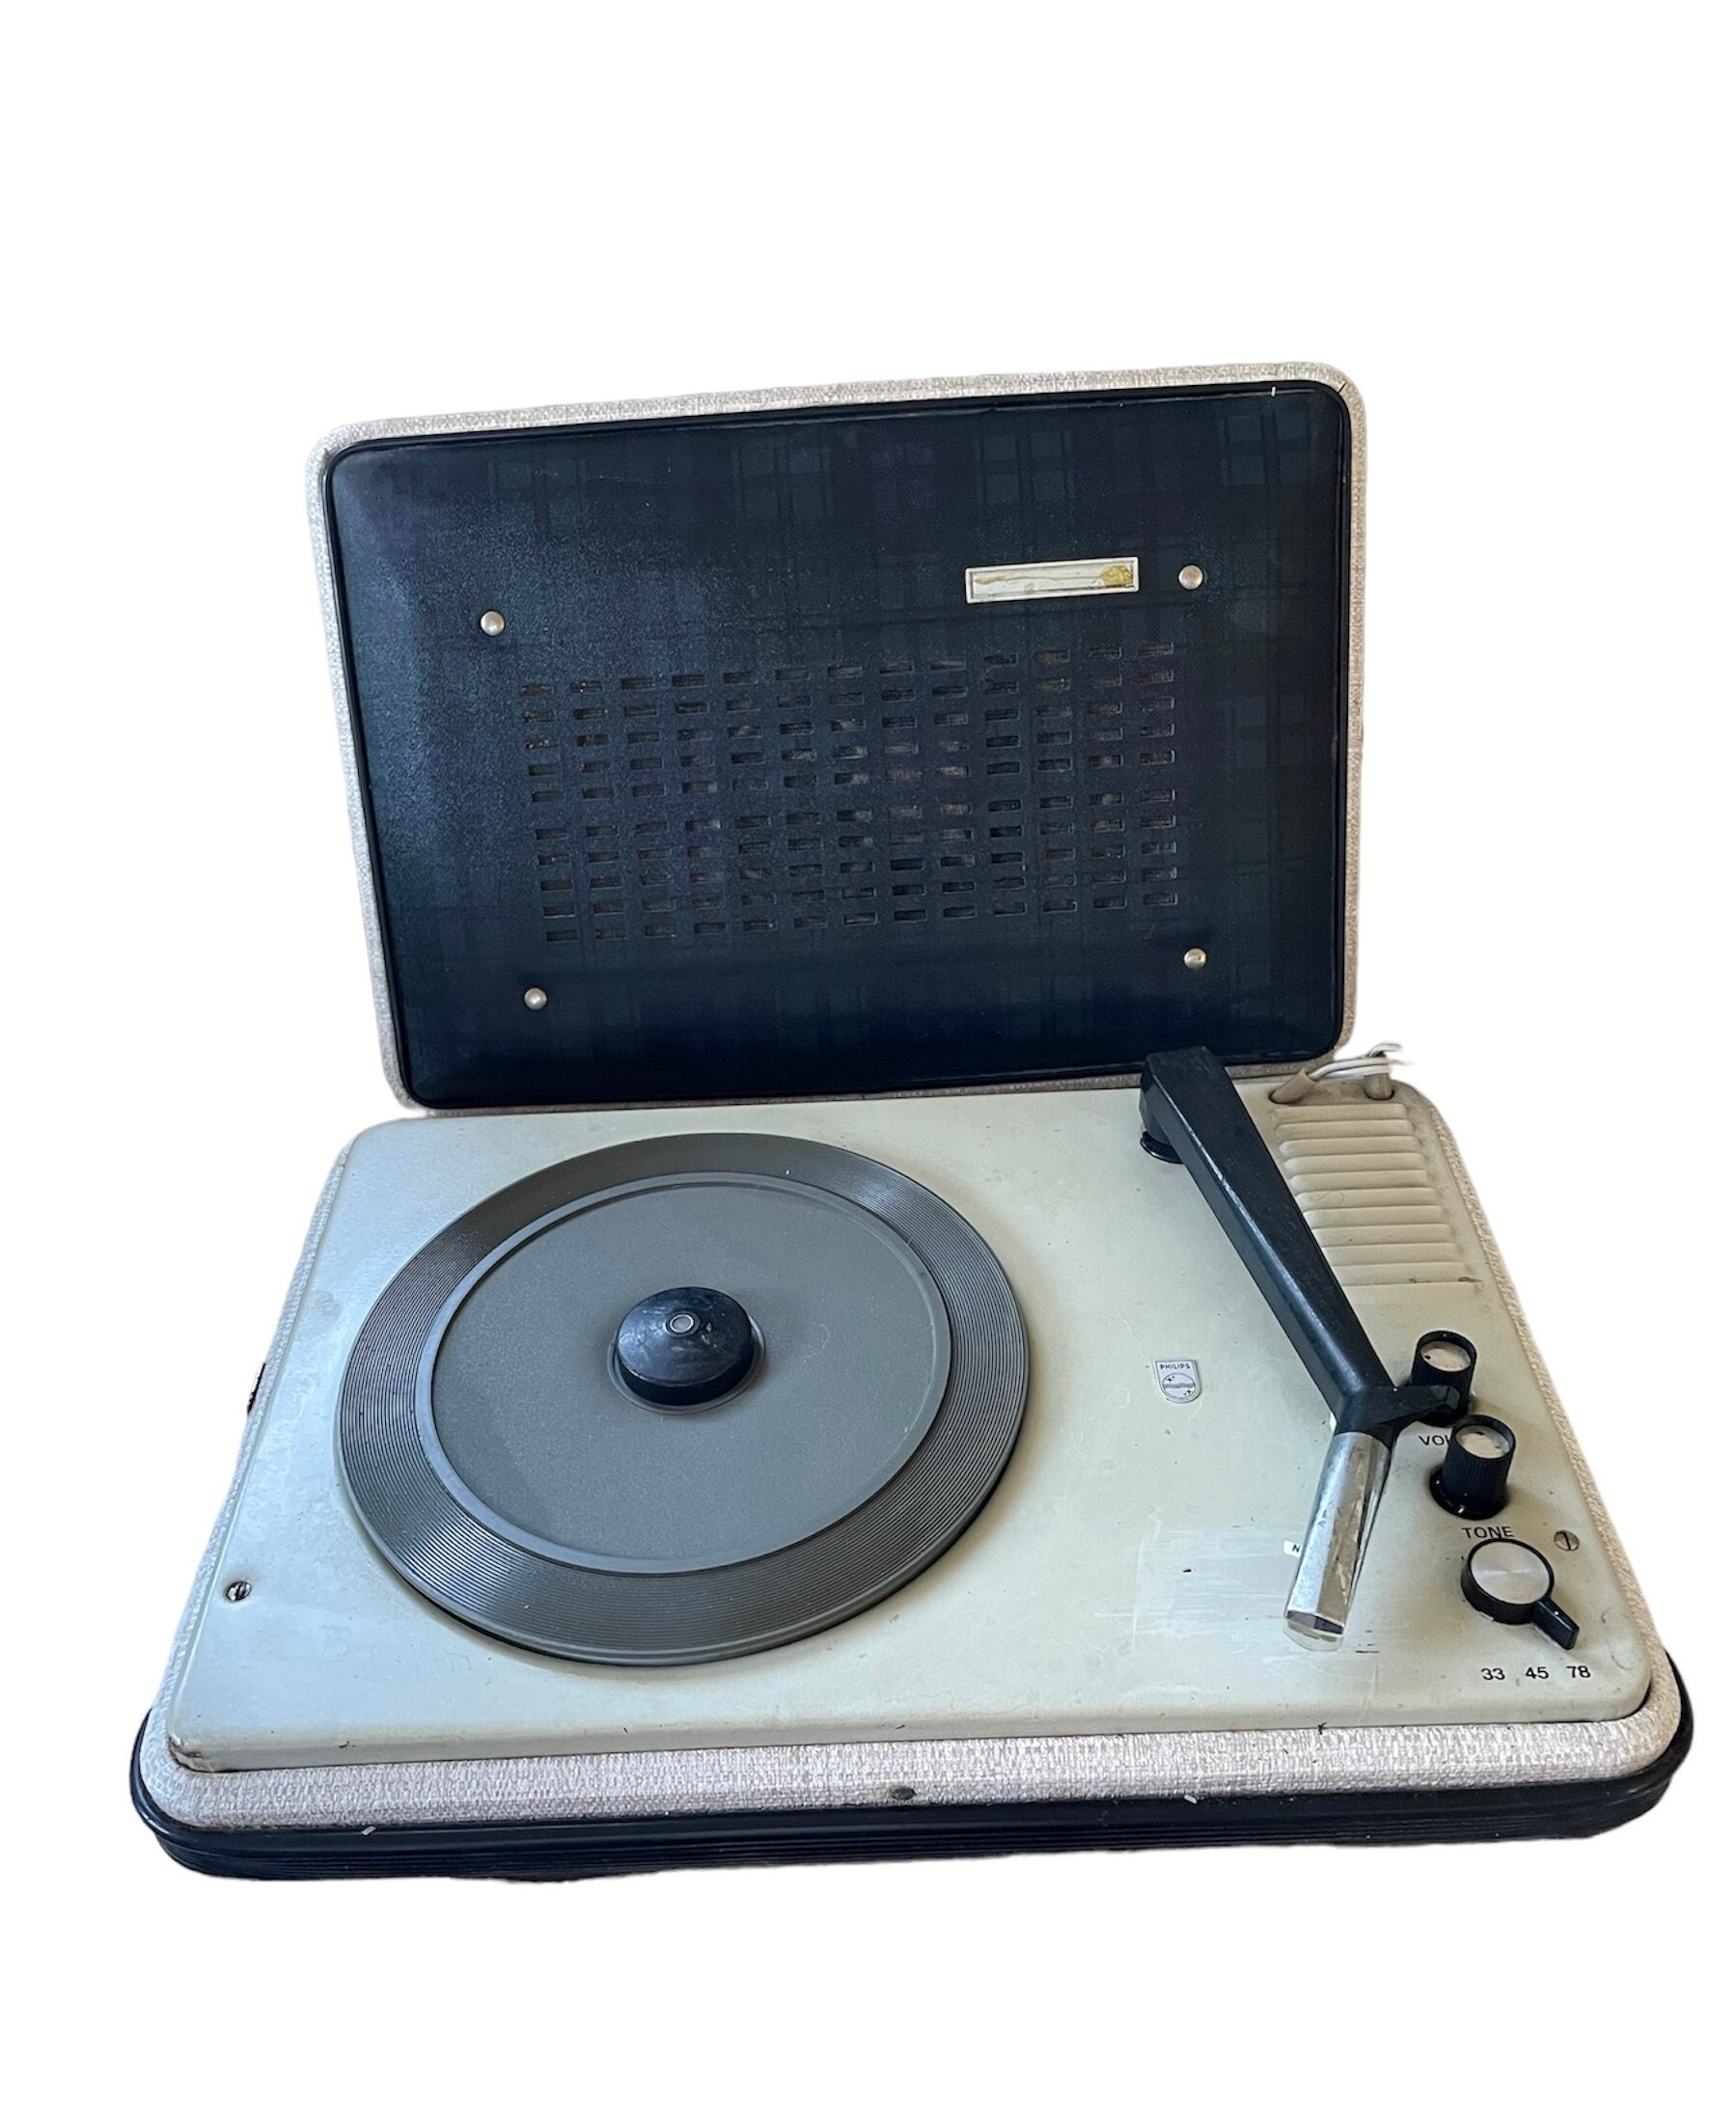 kit de nettoyage disque vinyl Marque Philips objet neuf emballage